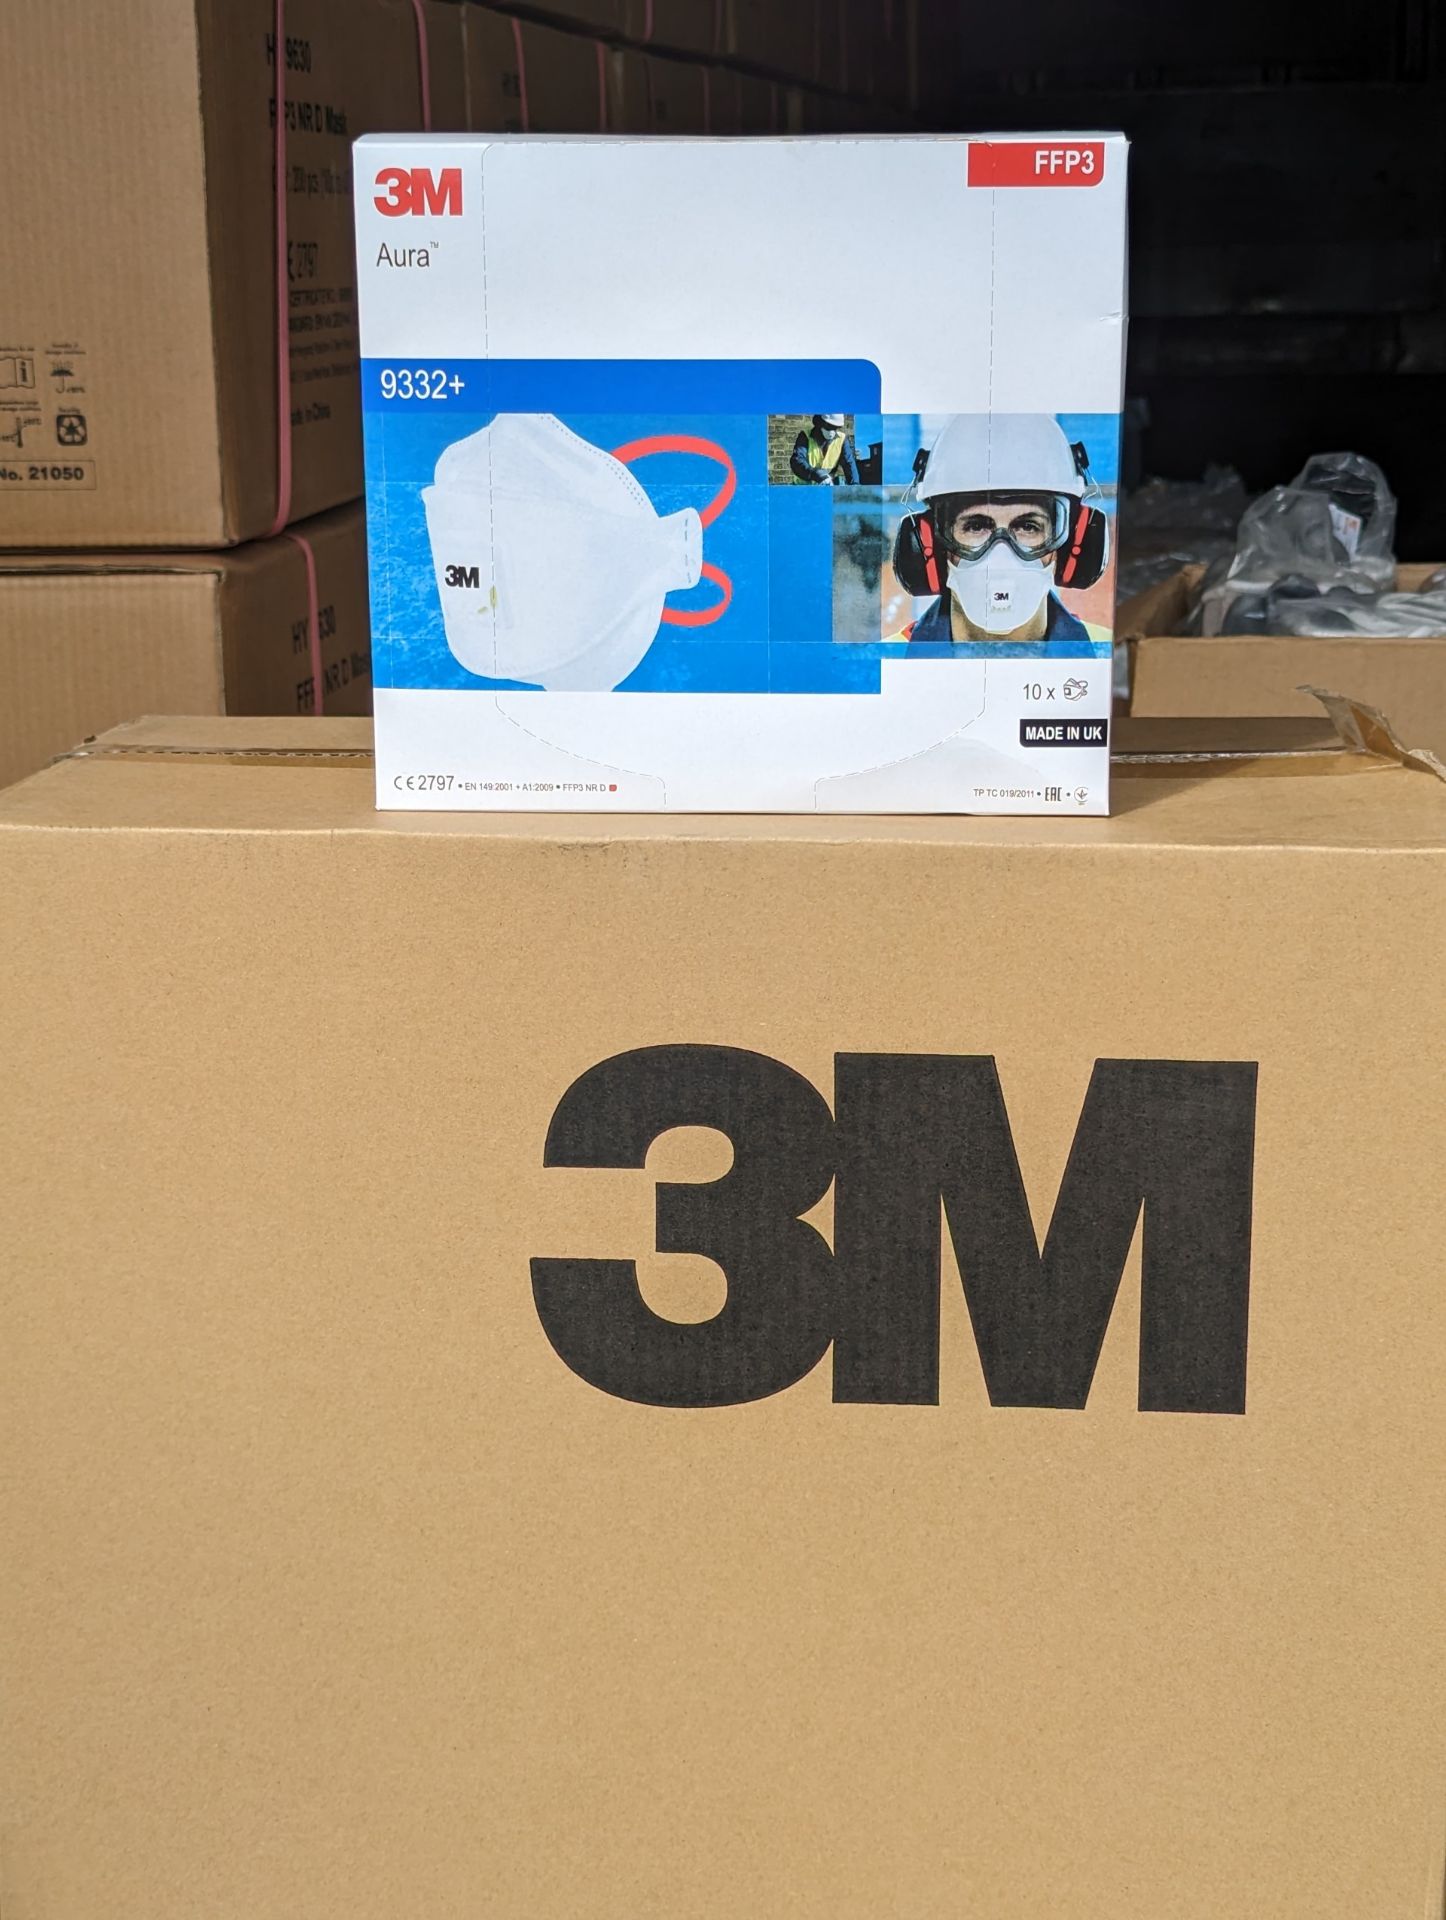 3M Aura FFP3 9332+ dust mask box of 120 units - Image 4 of 8